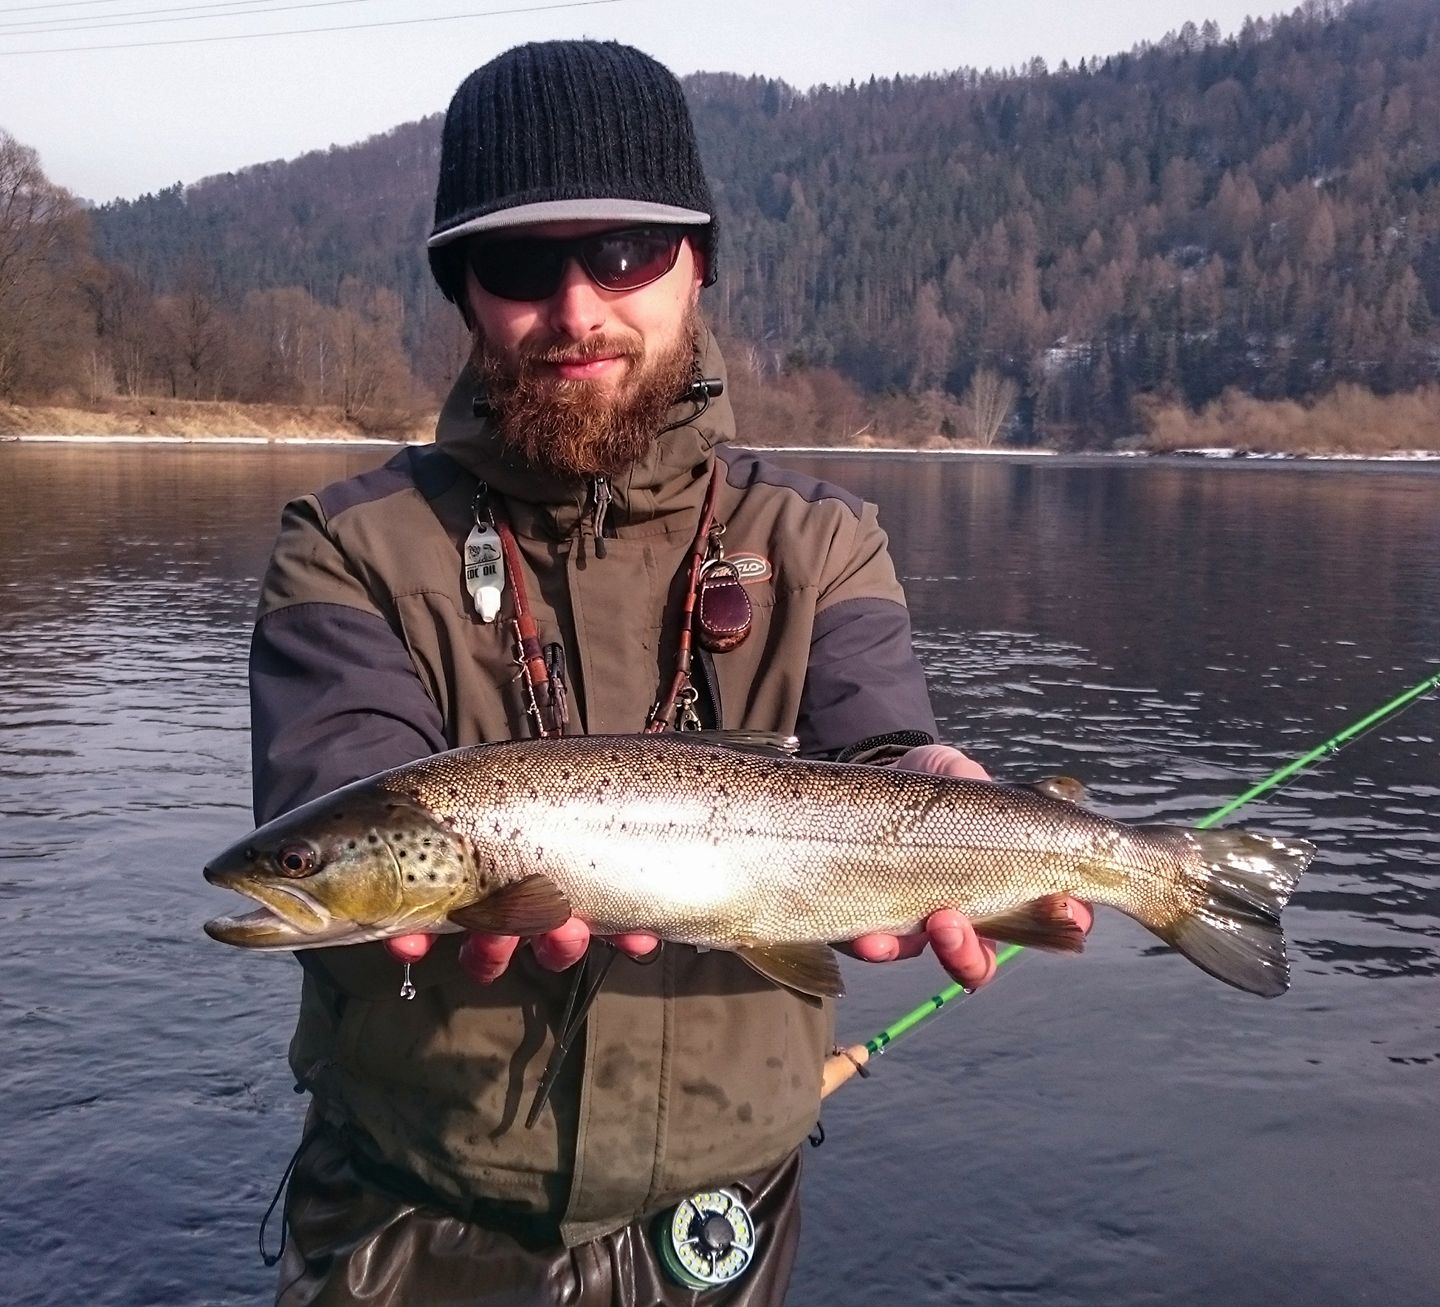 Dunajec Fishing streamer fishing day - fiber glass rod